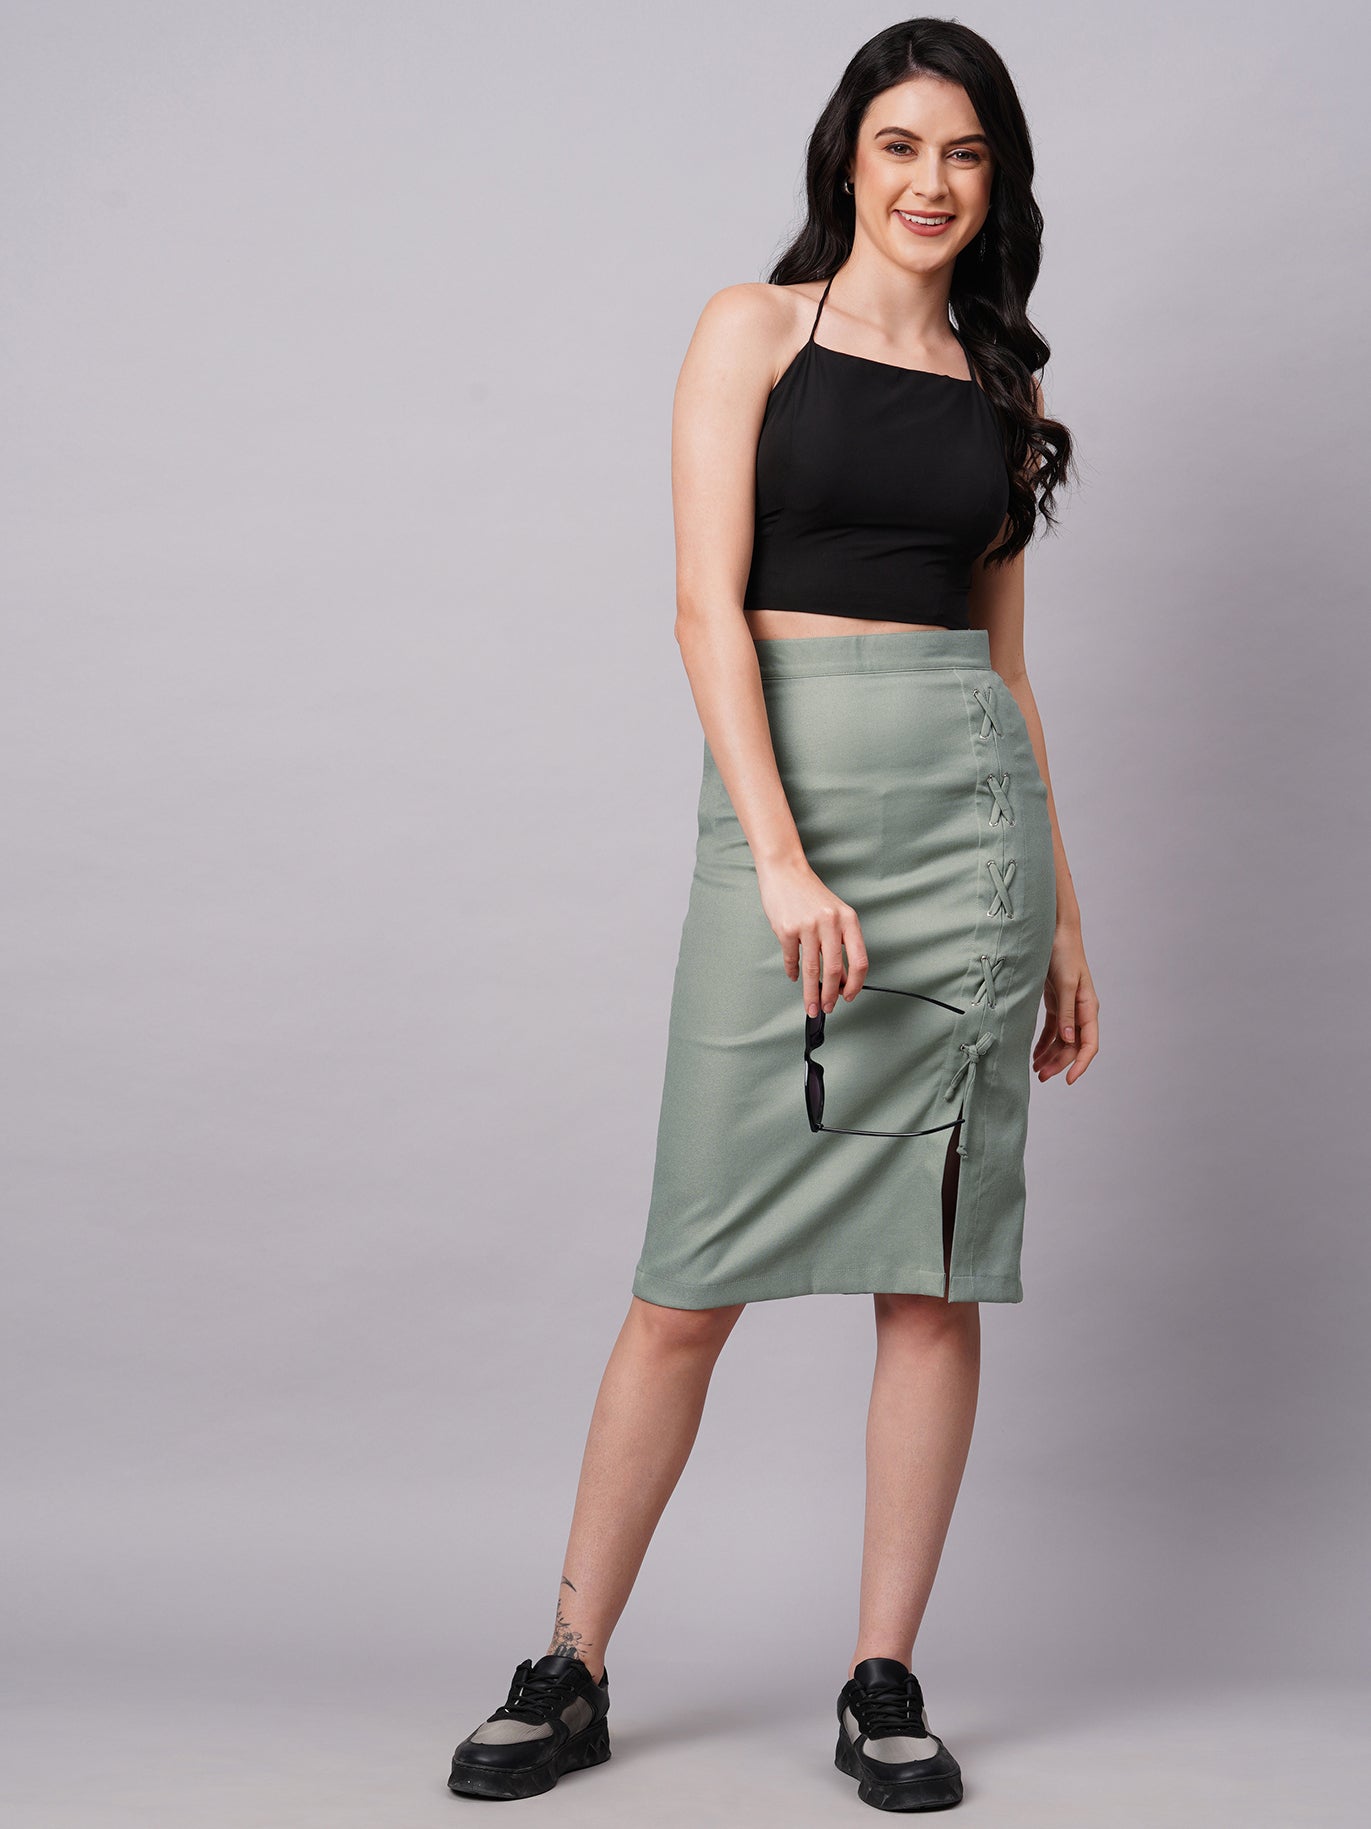 Silhouette Skirt - Styleyn